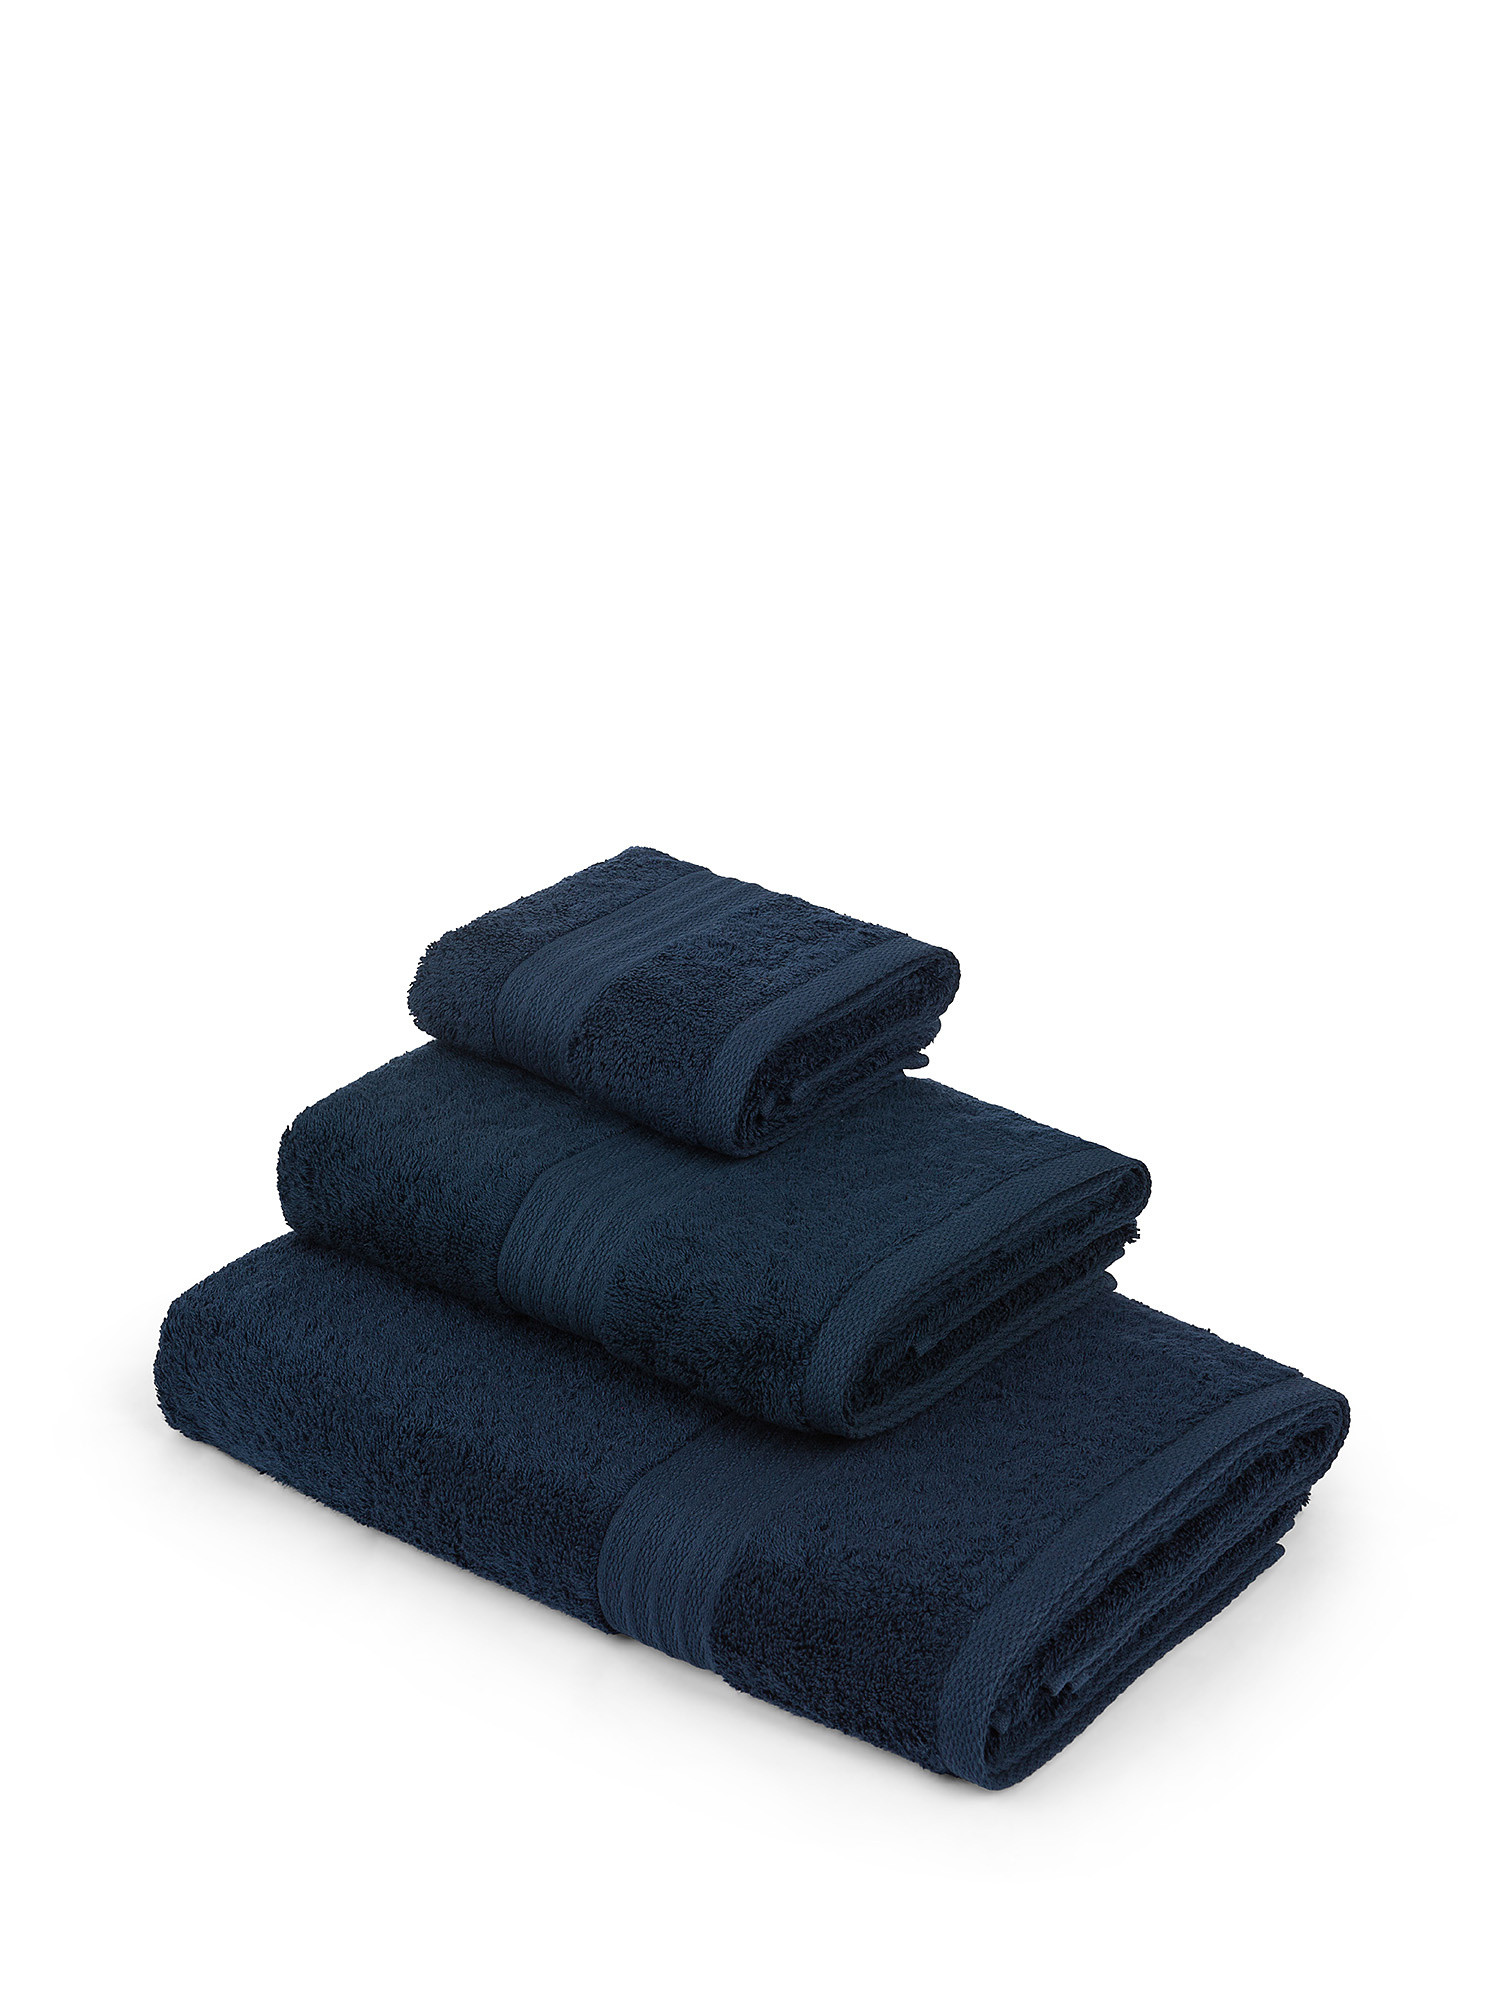 Zefiro solid color 100% cotton towel, Dark Blue, large image number 0